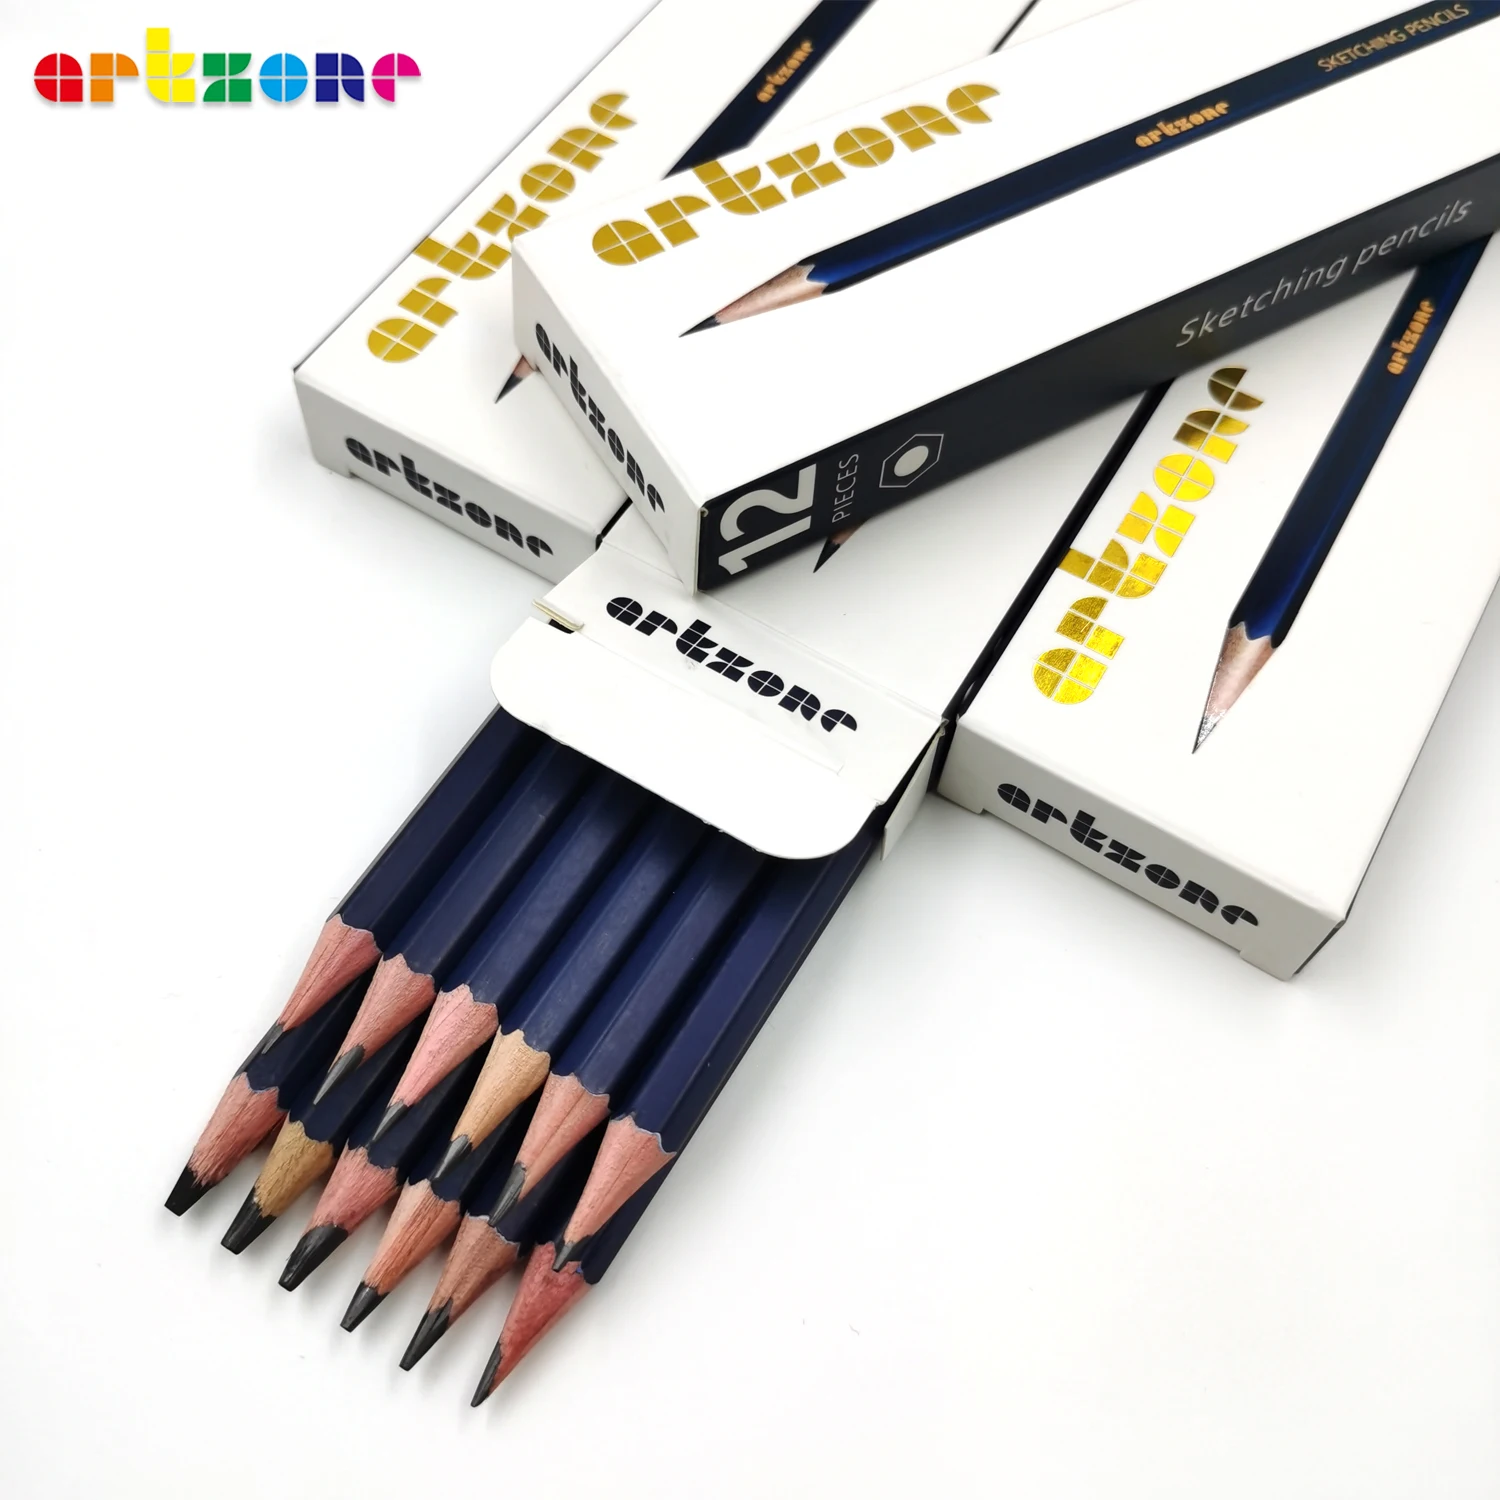 https://ae01.alicdn.com/kf/H050135f415714dadb68fe3c480baa2e30/ARTZONE-12-Pcs-Set-Professional-Drawing-Pencils-6H-12B-Sketch-Graphite-Art-Pencil-Set-Supplies-for.jpg